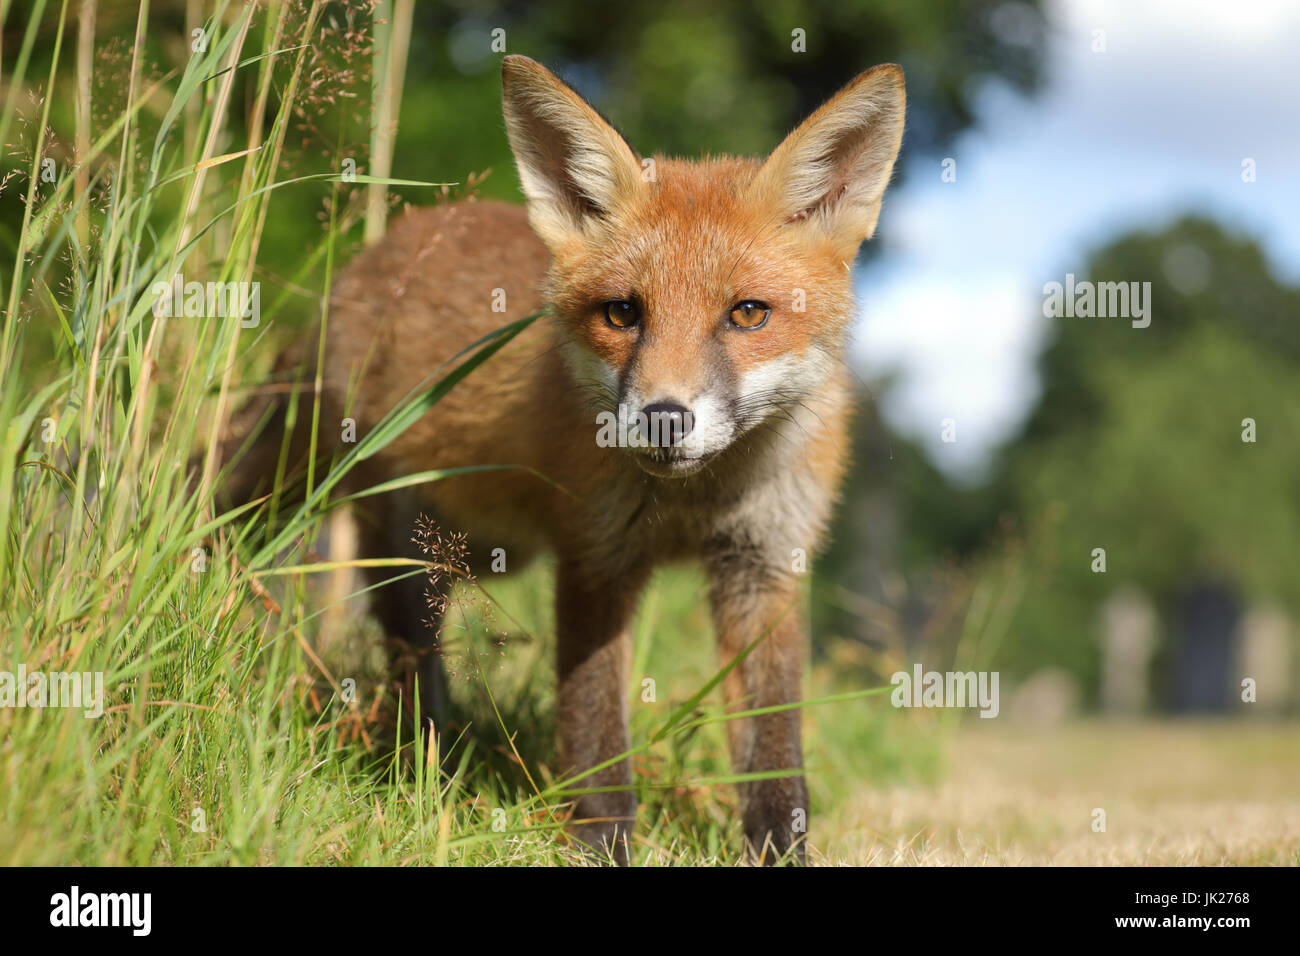 Fox cub rencontre proche Banque D'Images